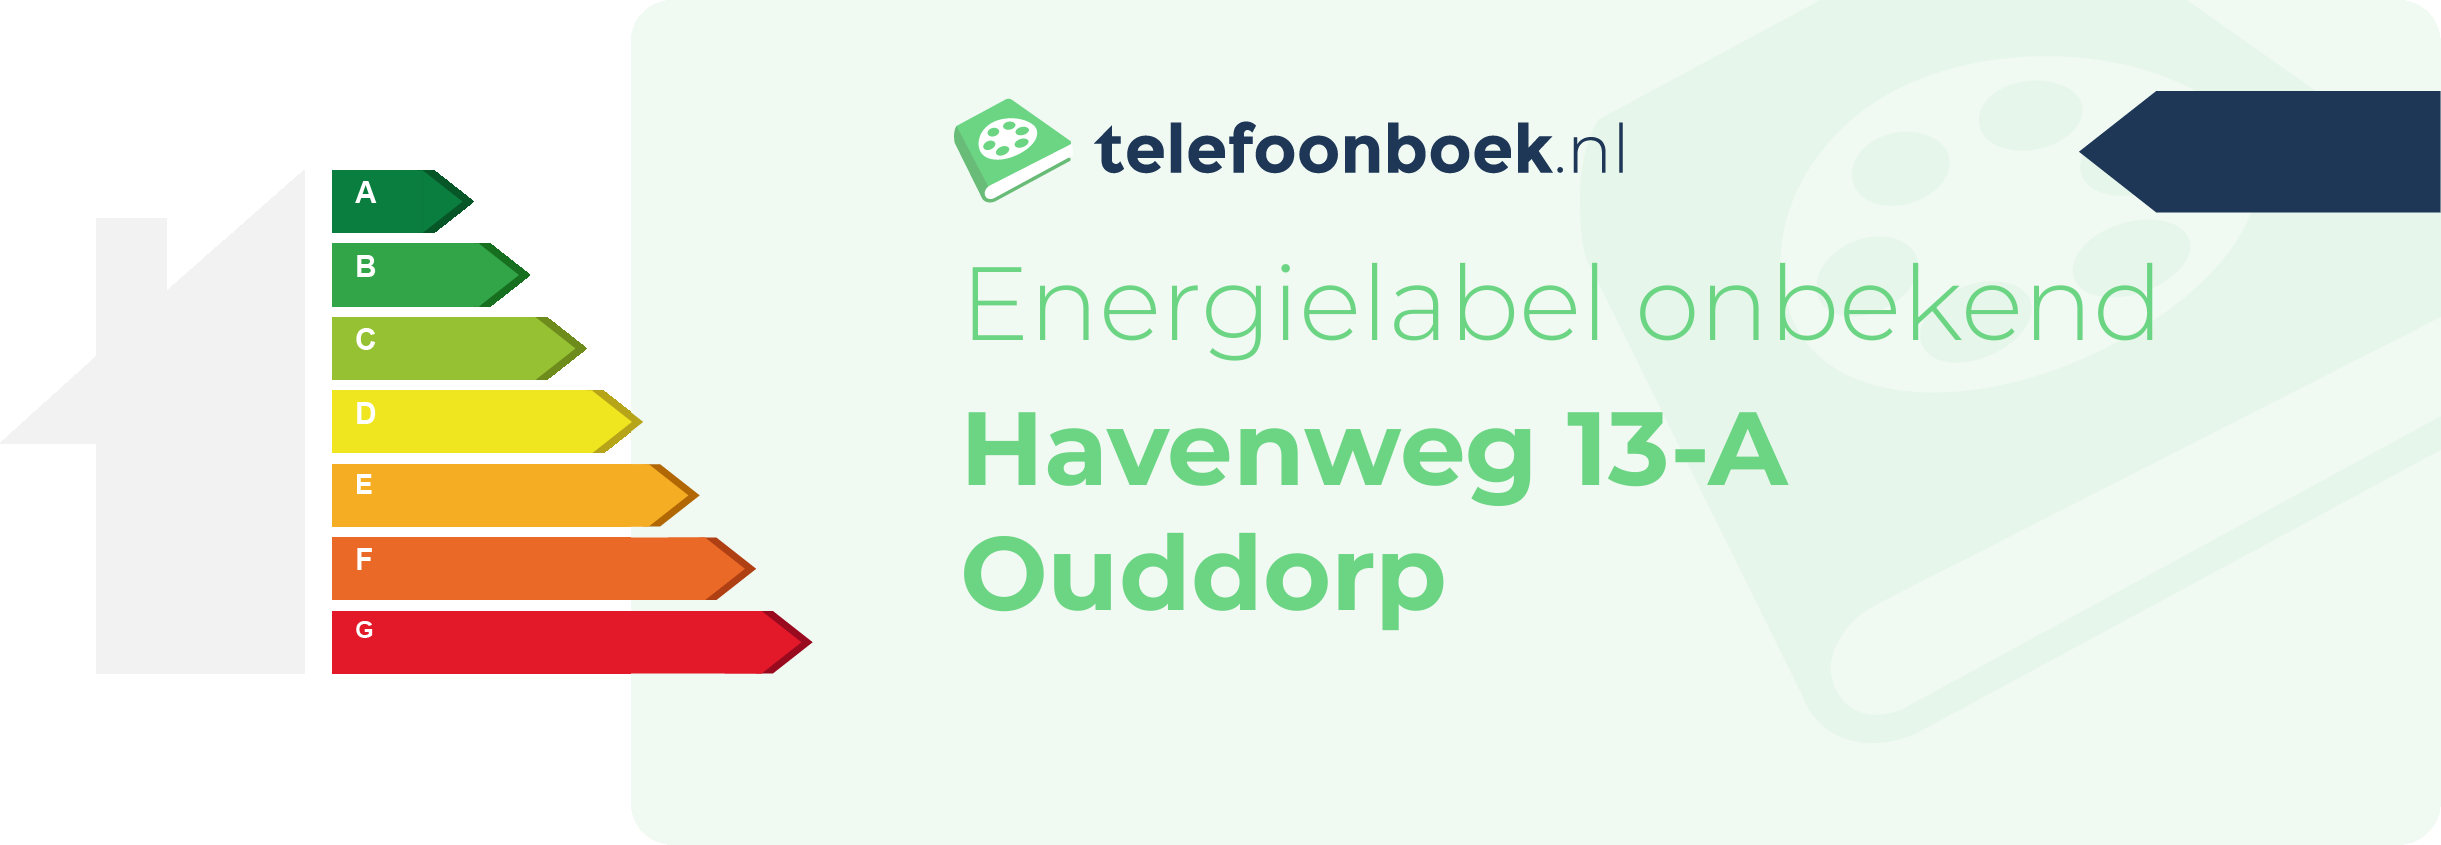 Energielabel Havenweg 13-A Ouddorp